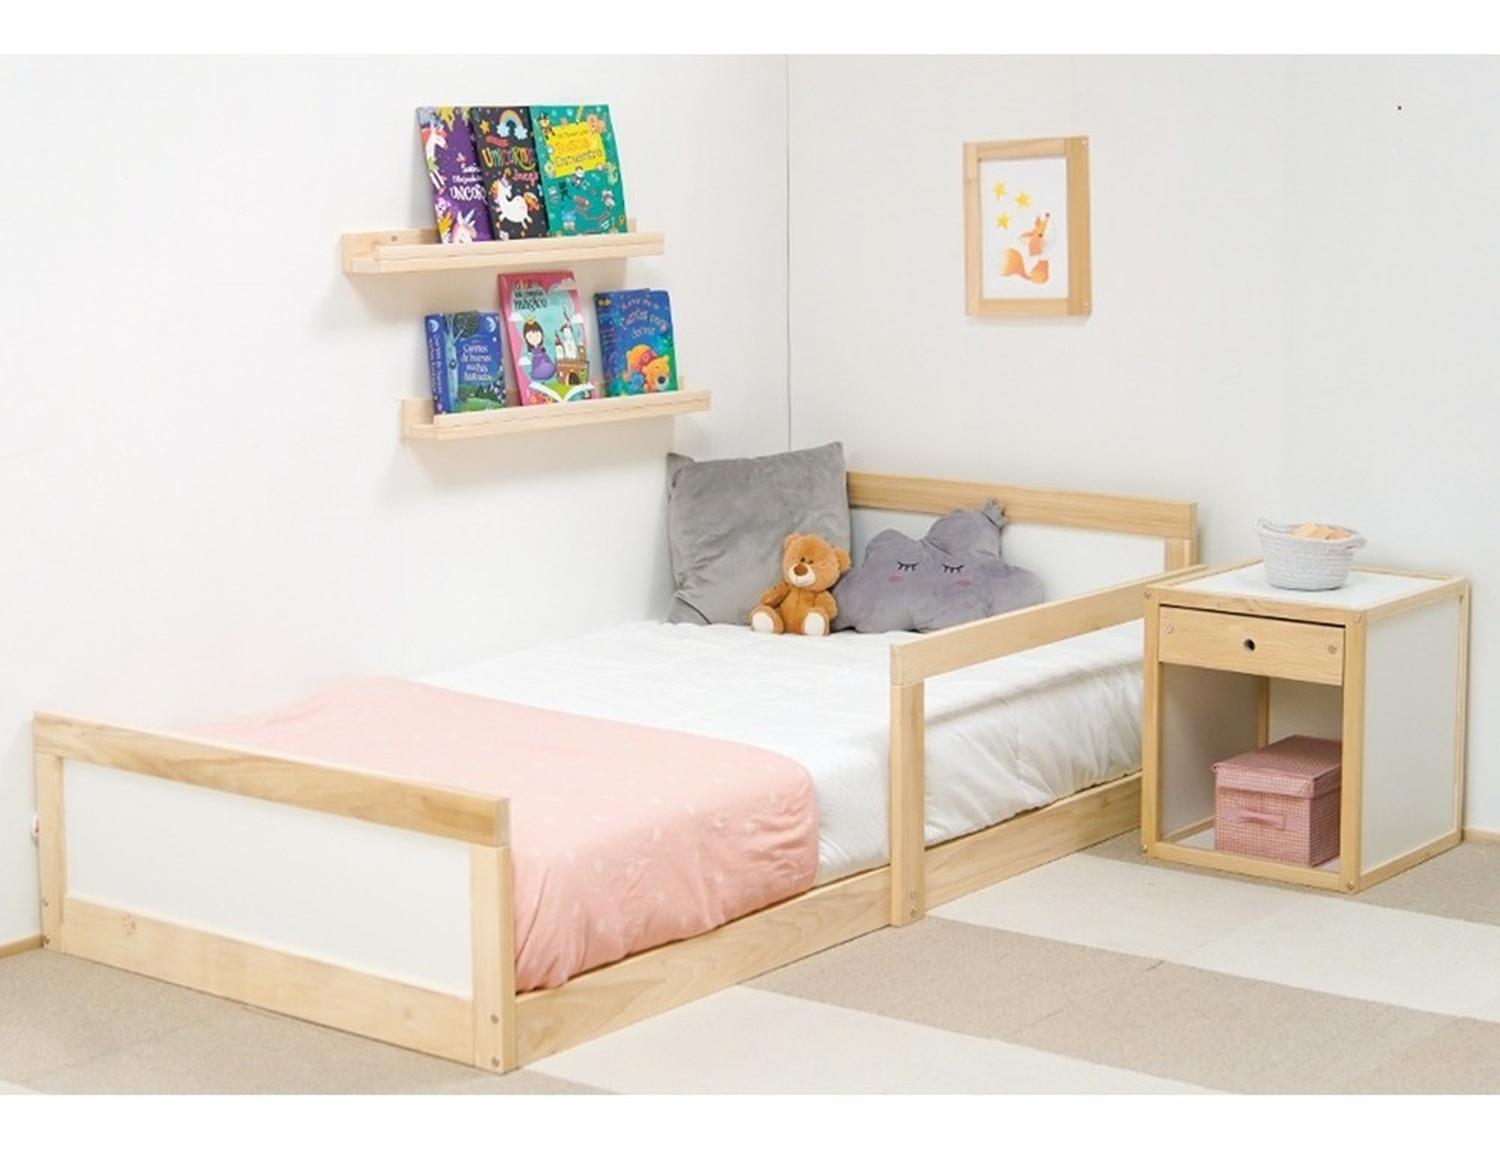 Plano de cama de la casa del piso Montessori, plano de la cama de 70x140 cm